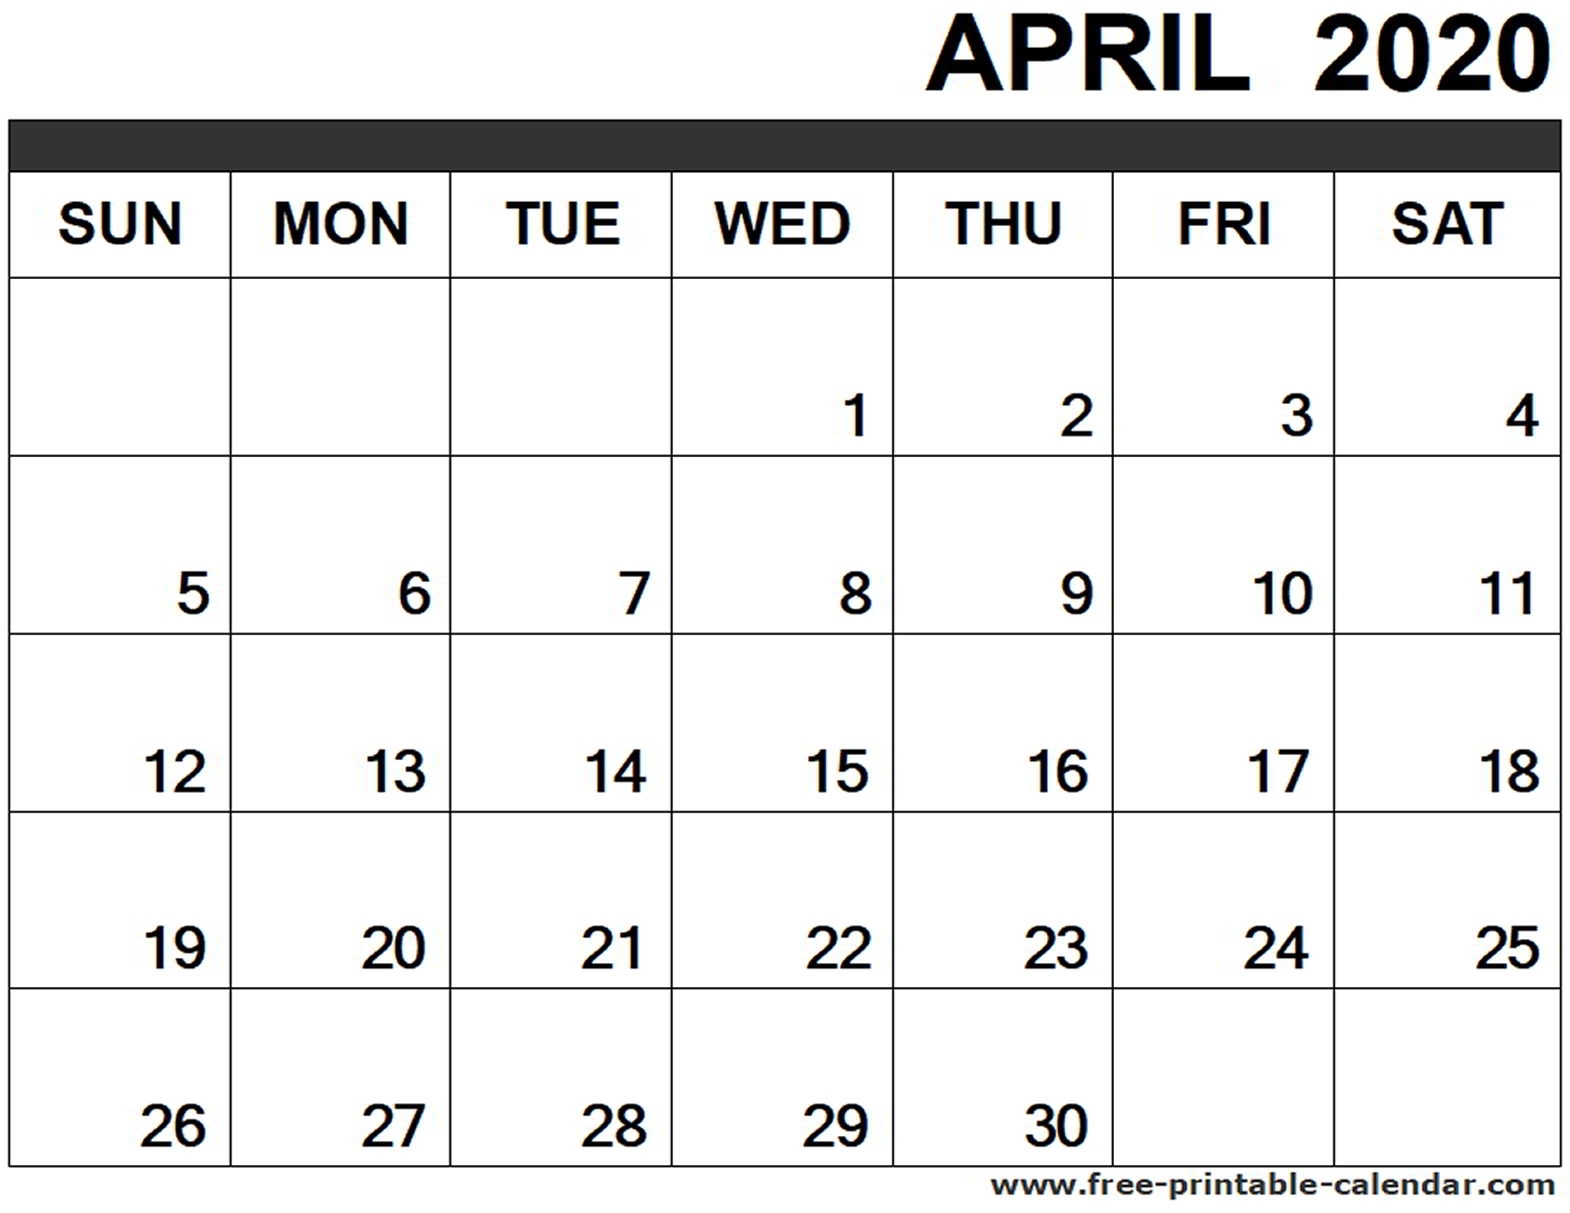 April 2020 Calendar Printable - Free-Printable-Calendar